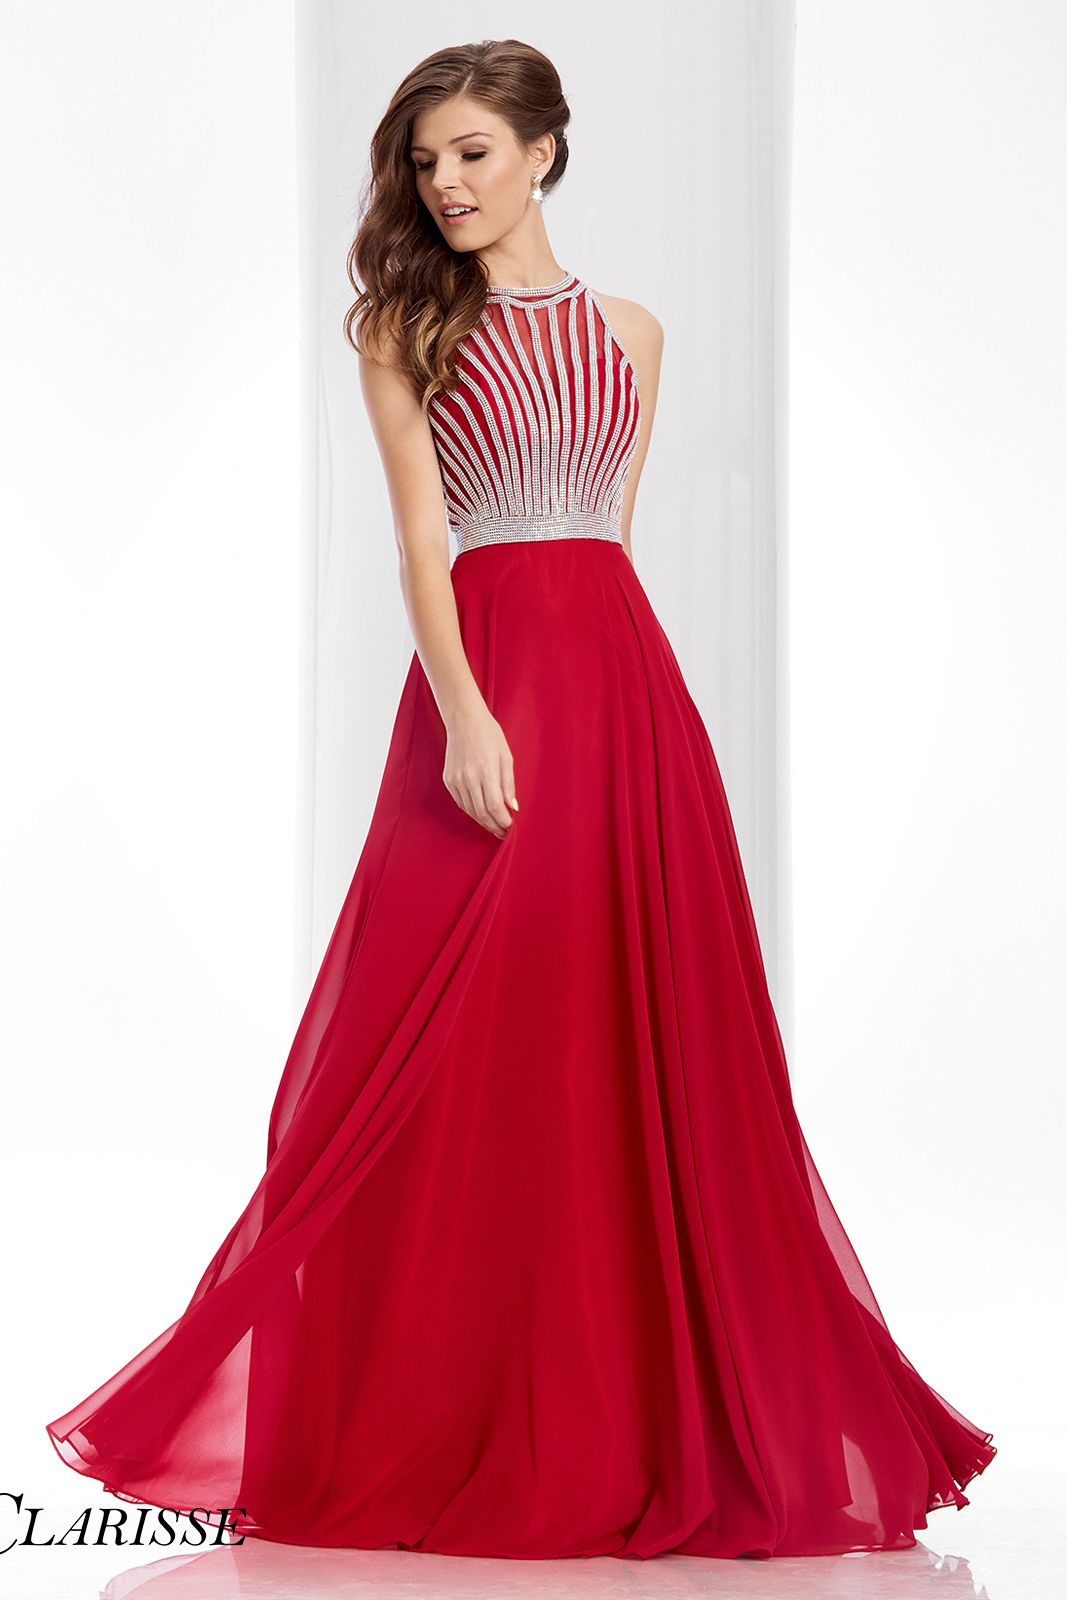 Clarisse -3068 Chiffon Halter Prom Dress